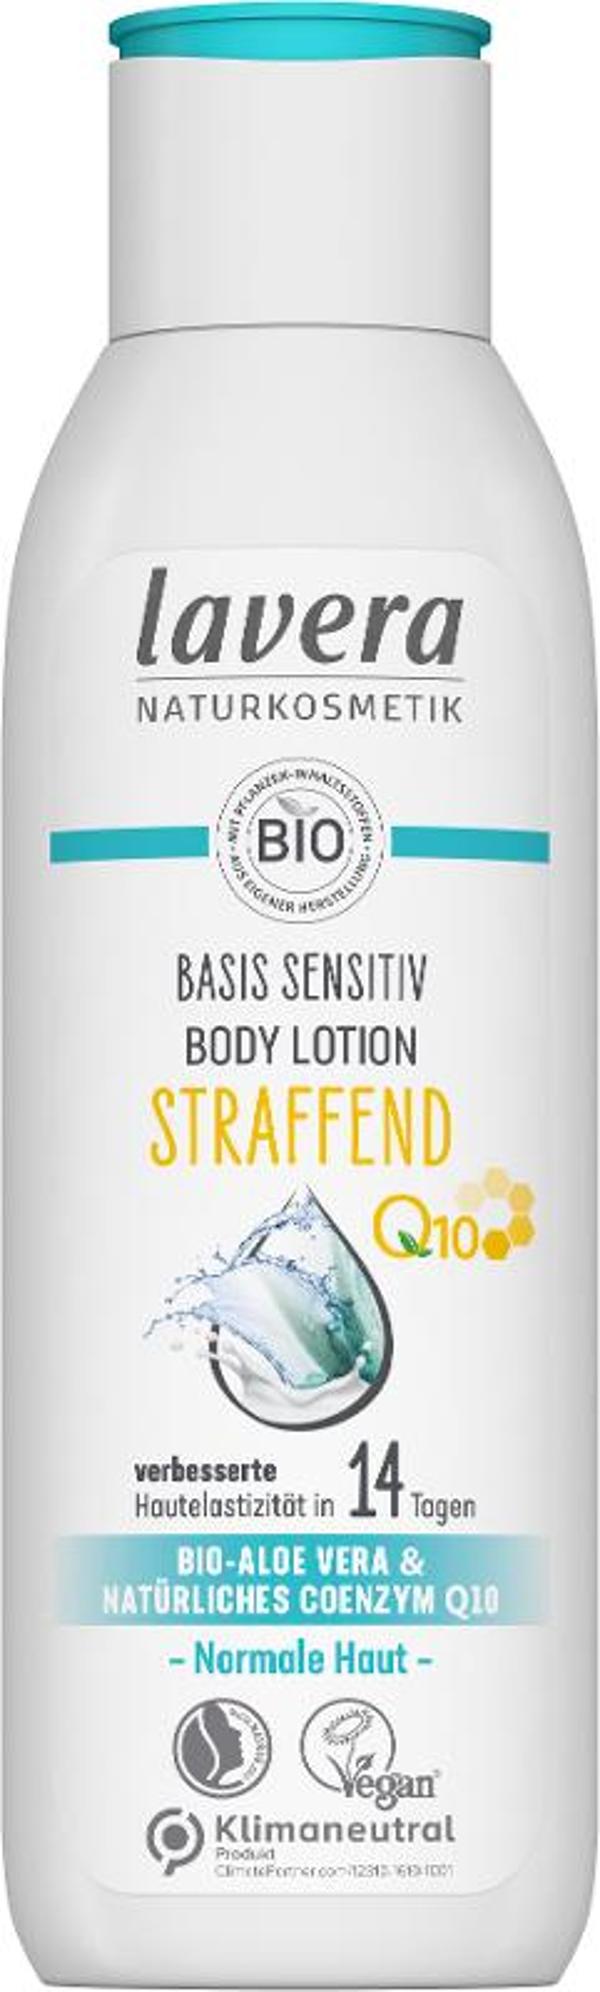 Produktfoto zu Basis Sensitiv Bodylotion Straffend Q10, 250 ml